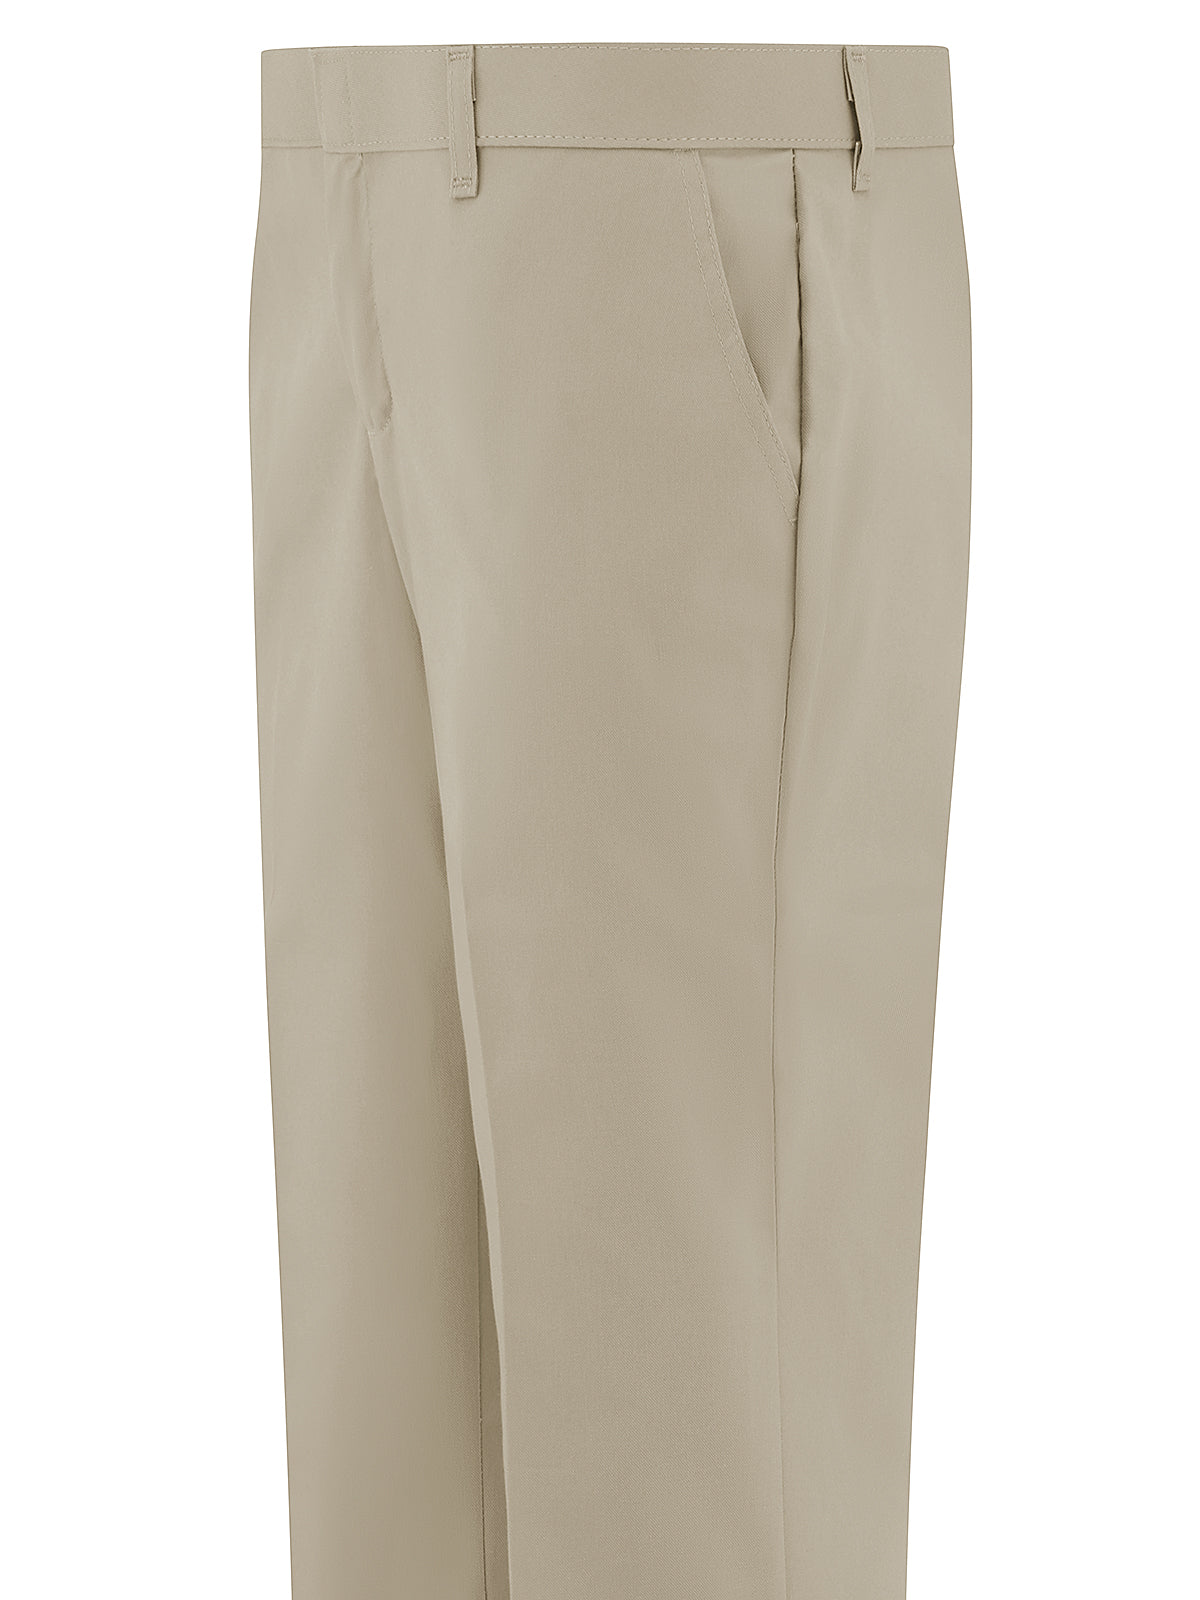 Women's Premium Flat Front Pant - FP21 - Desert Sand